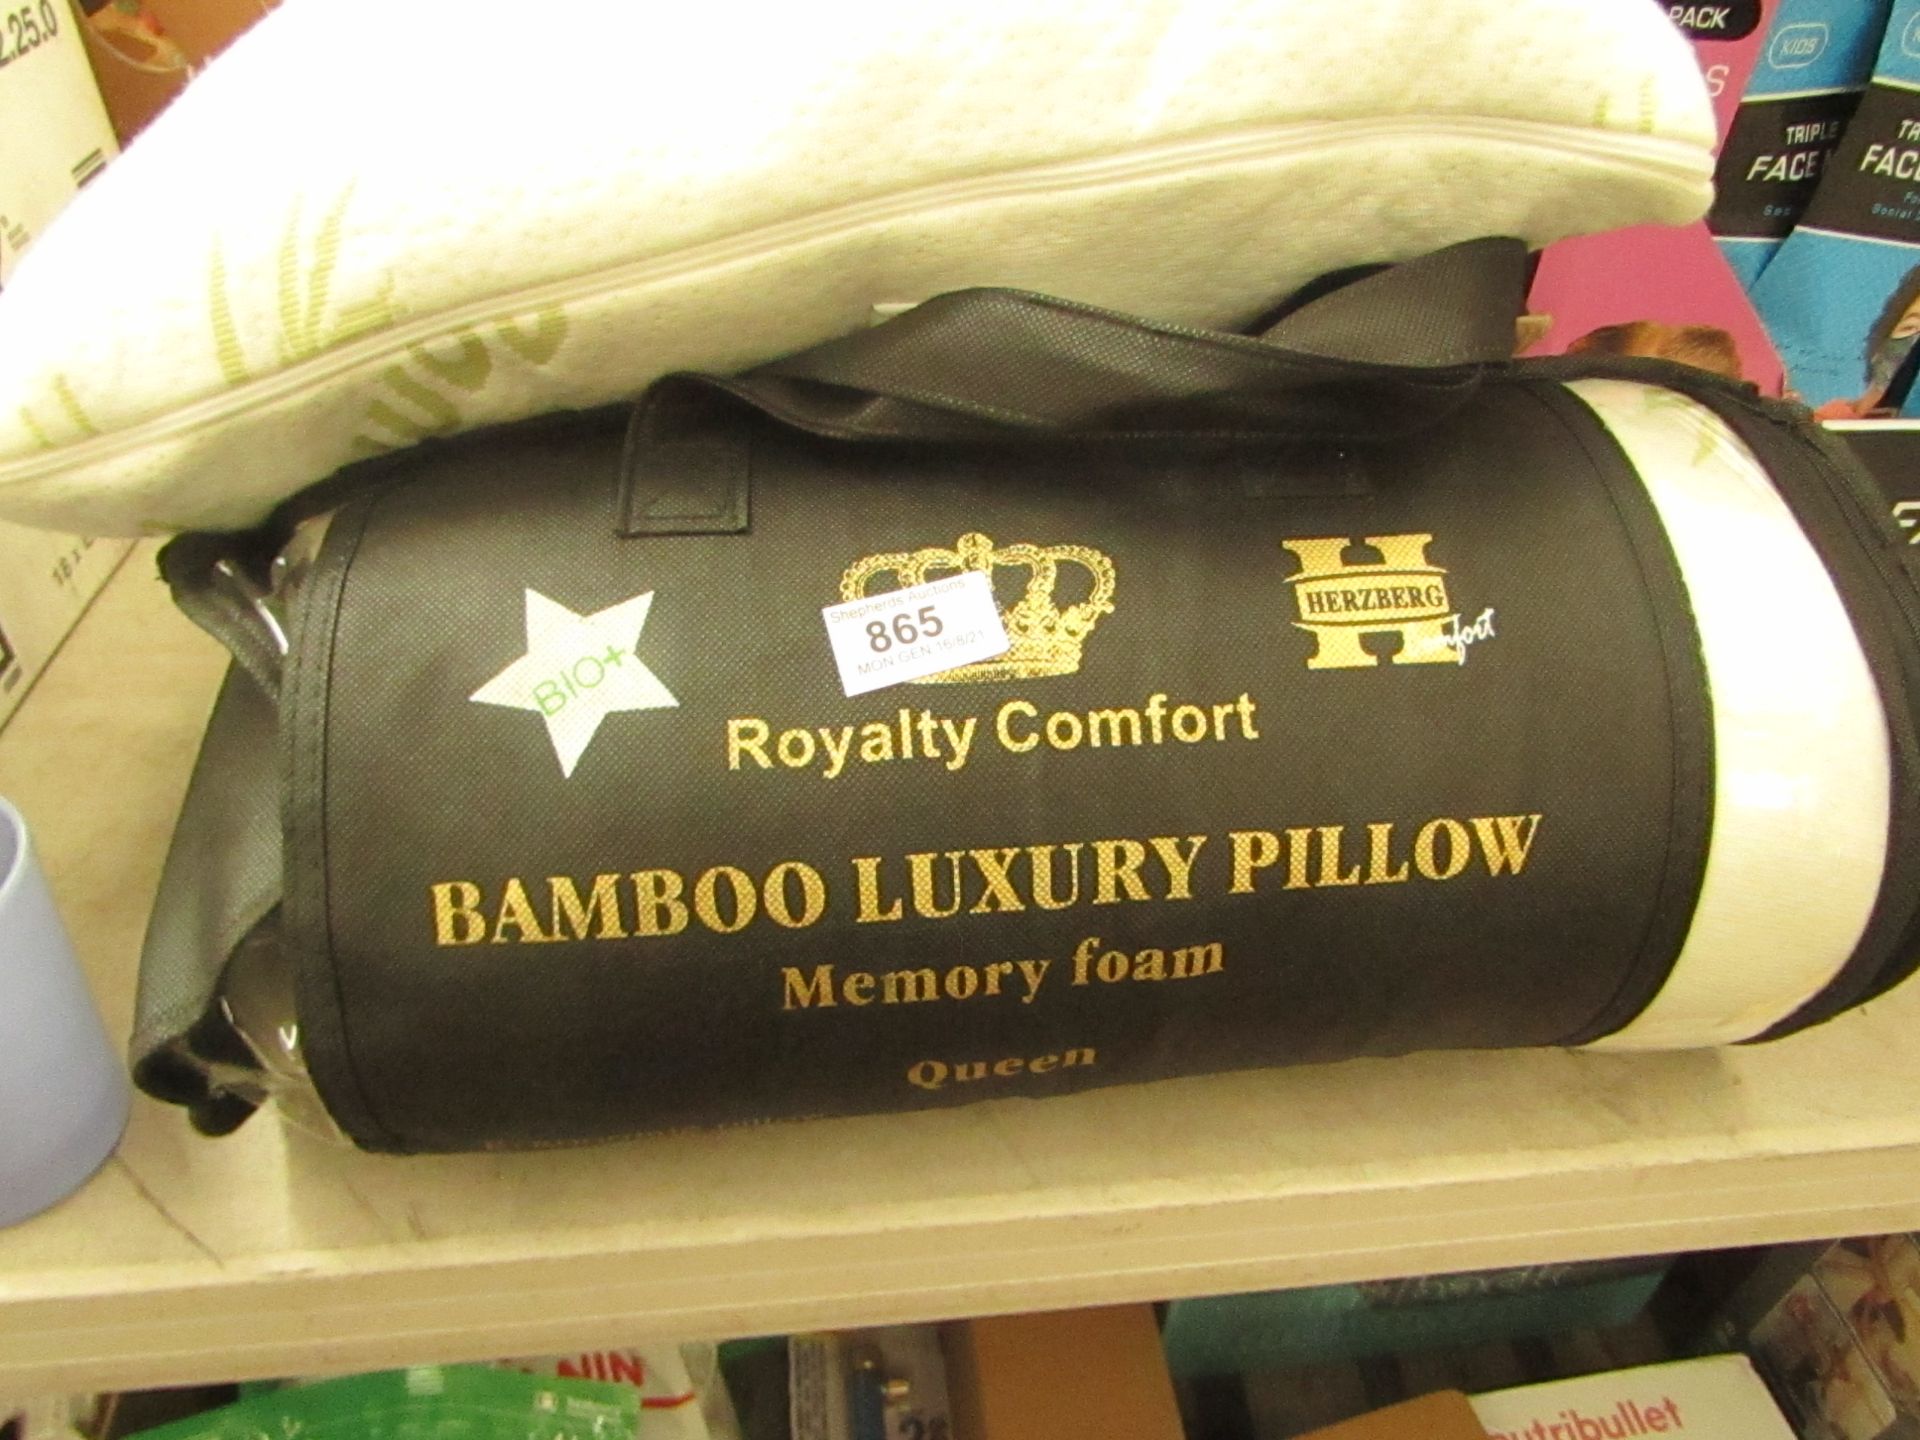 Royalty Comfort - Bamboo Luxury Pillow Memory Foam - (Queen) - Unused & Packaged.